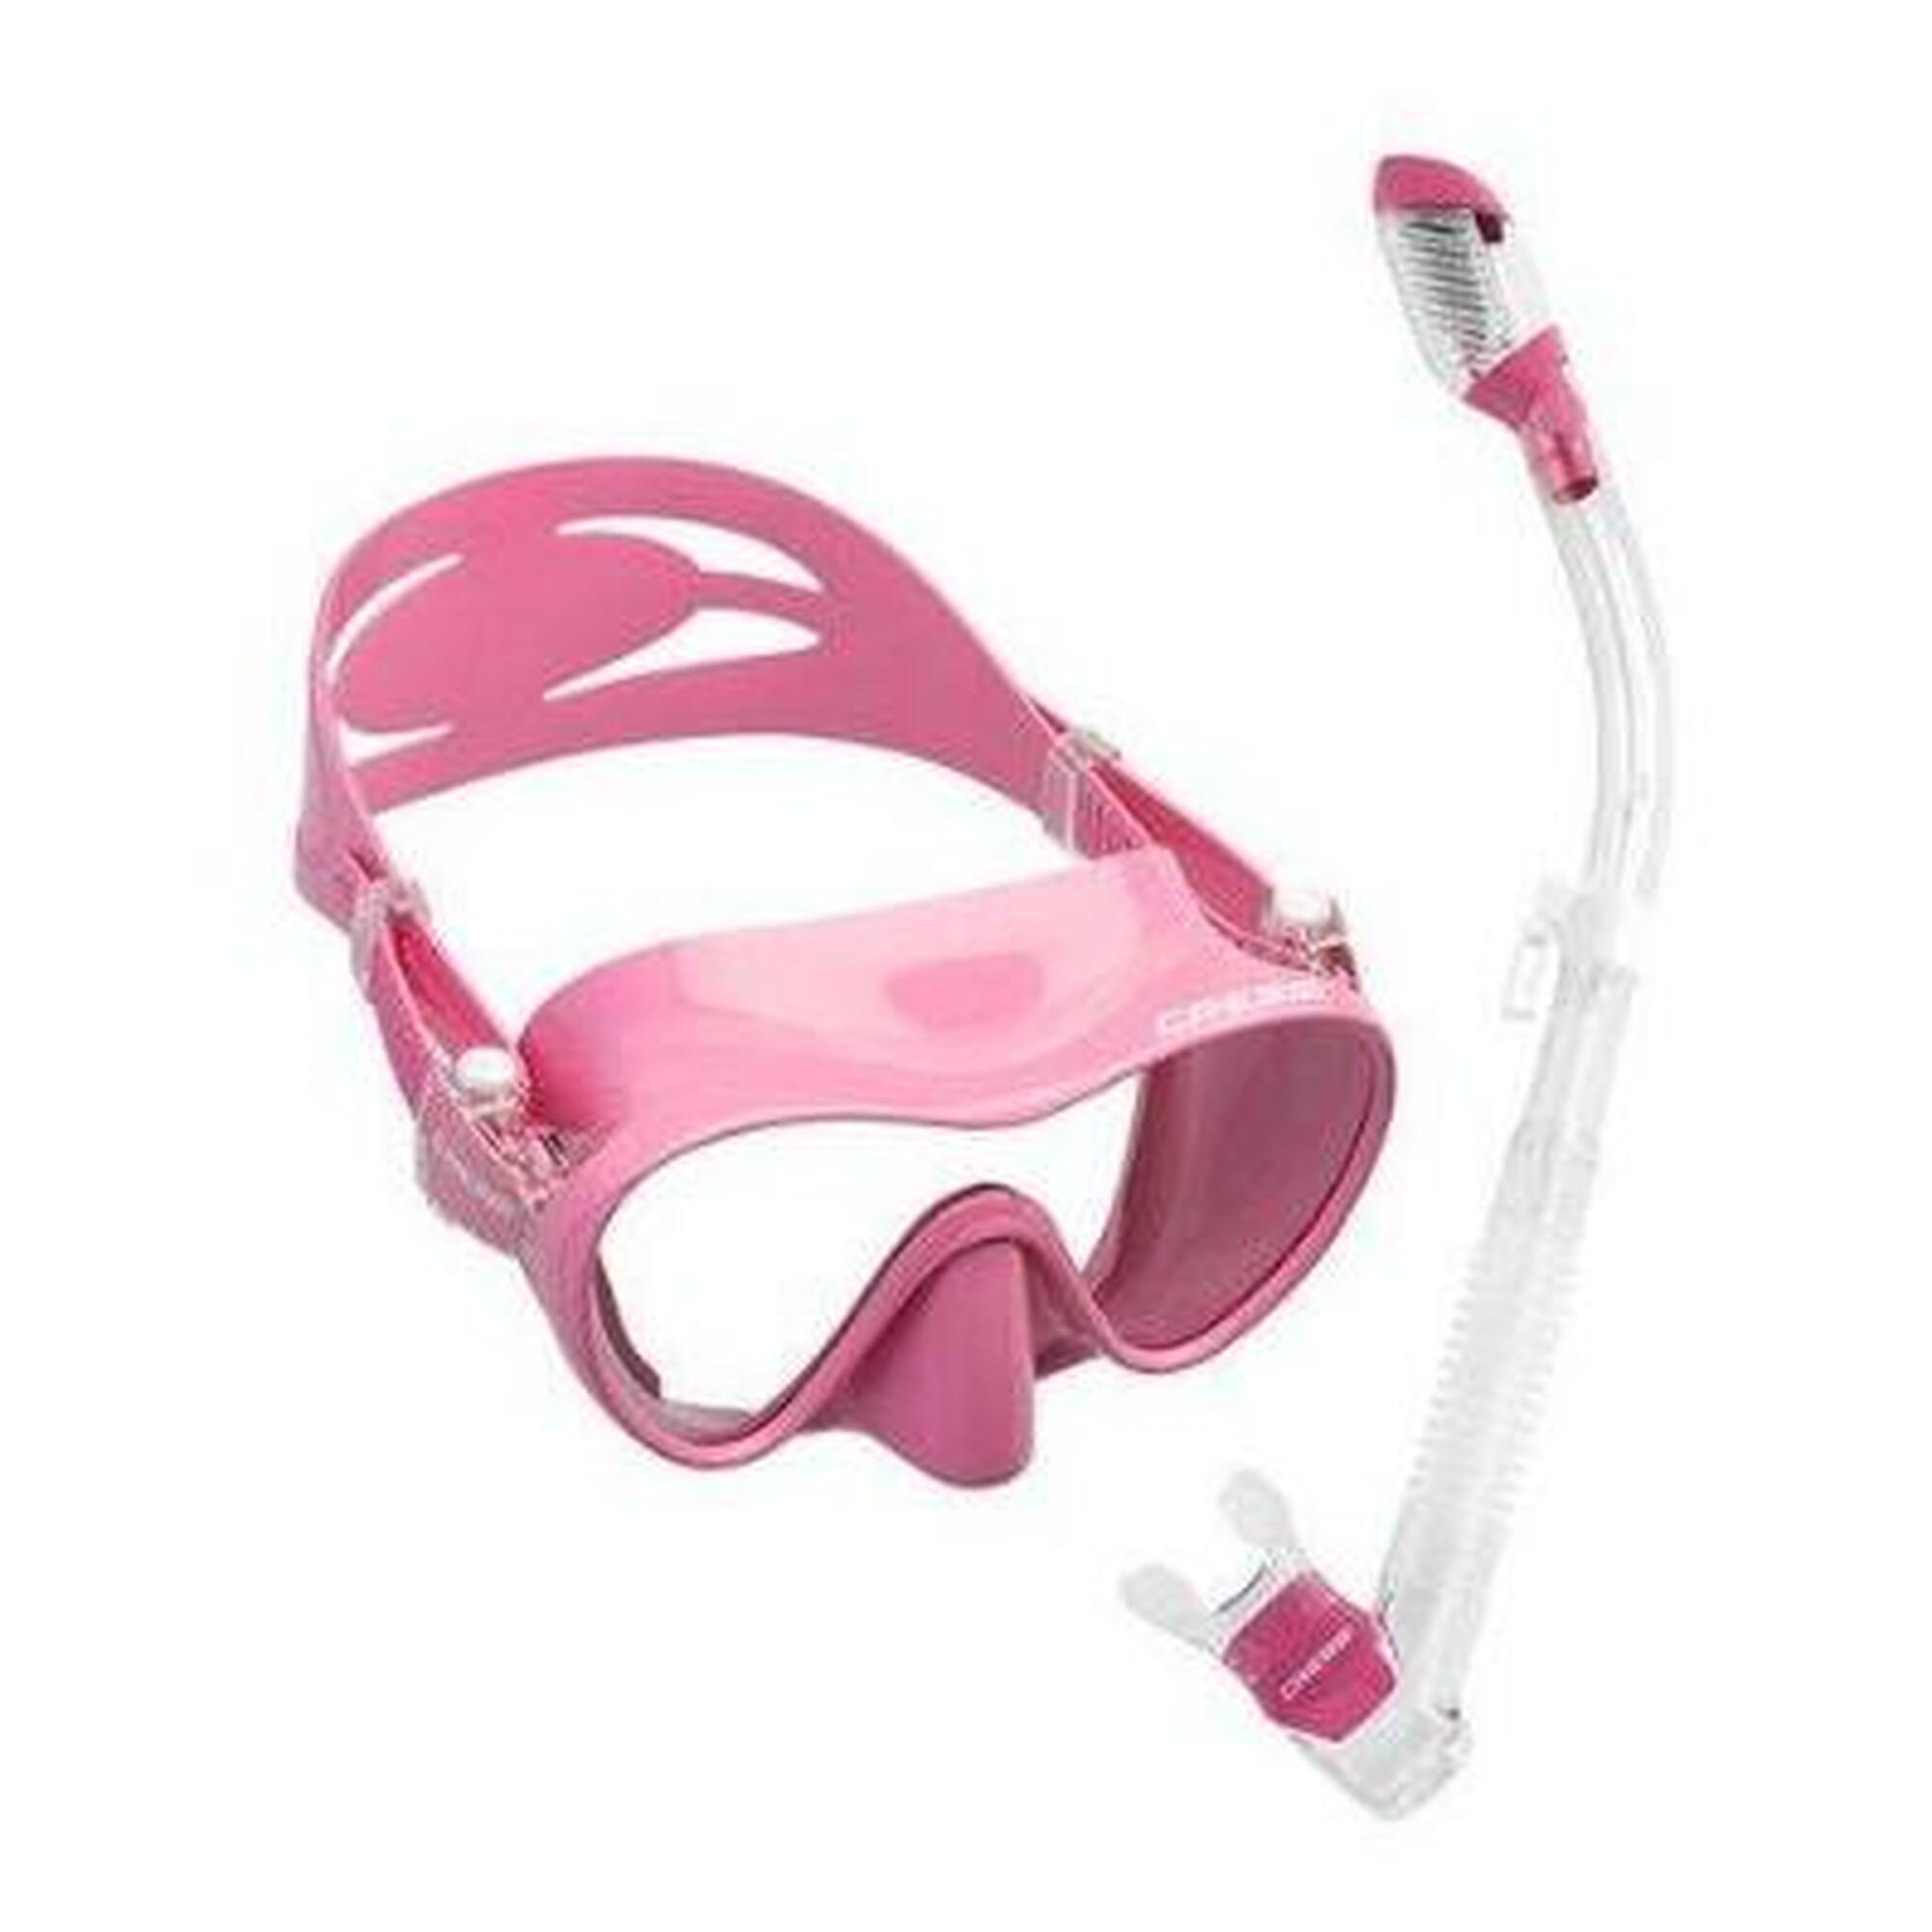 F1 Frameless mask + Dry Snorkel Combo - Pink